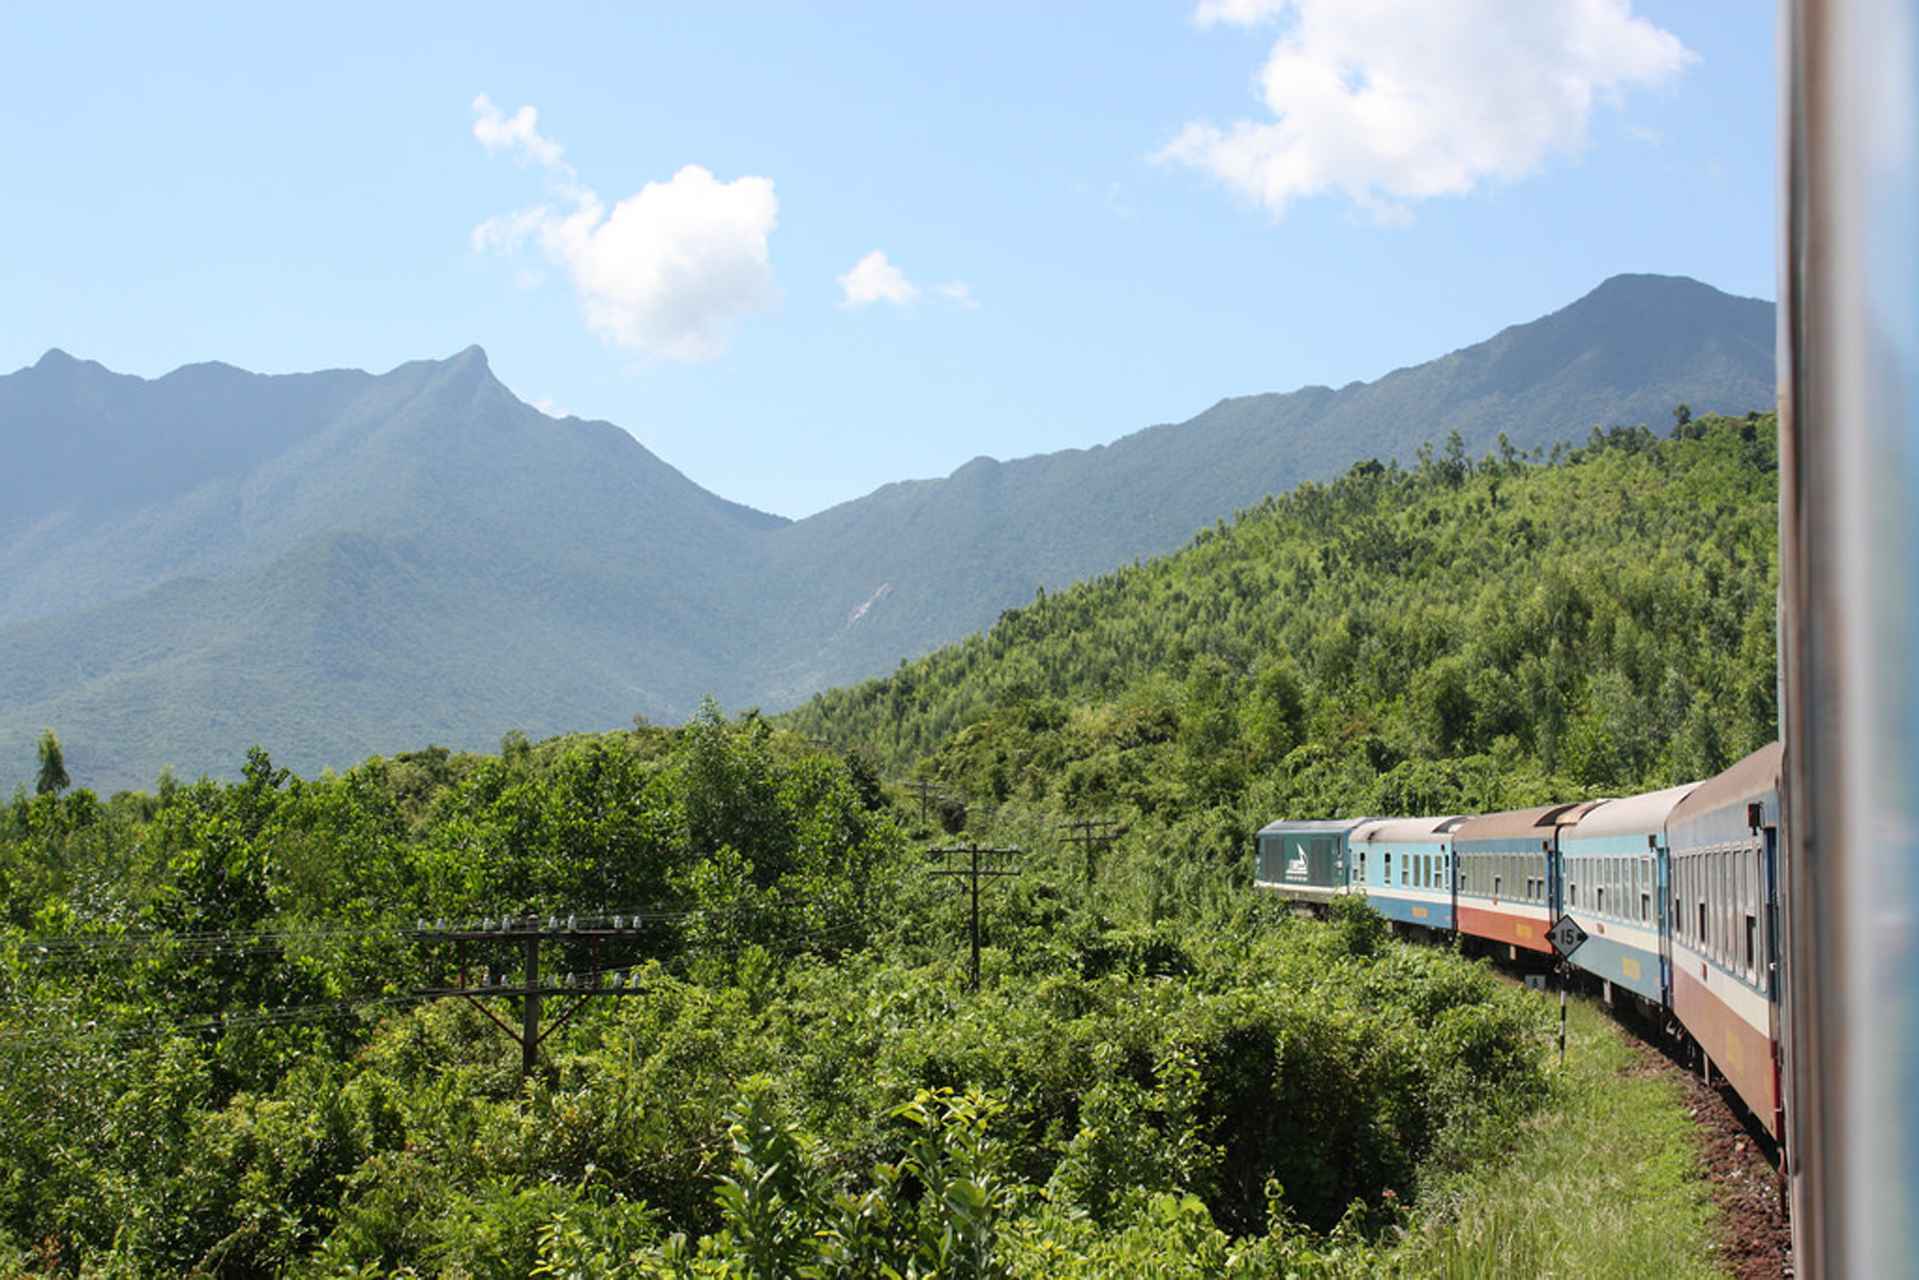 Train journey along Hai Van Pass in Vietnam